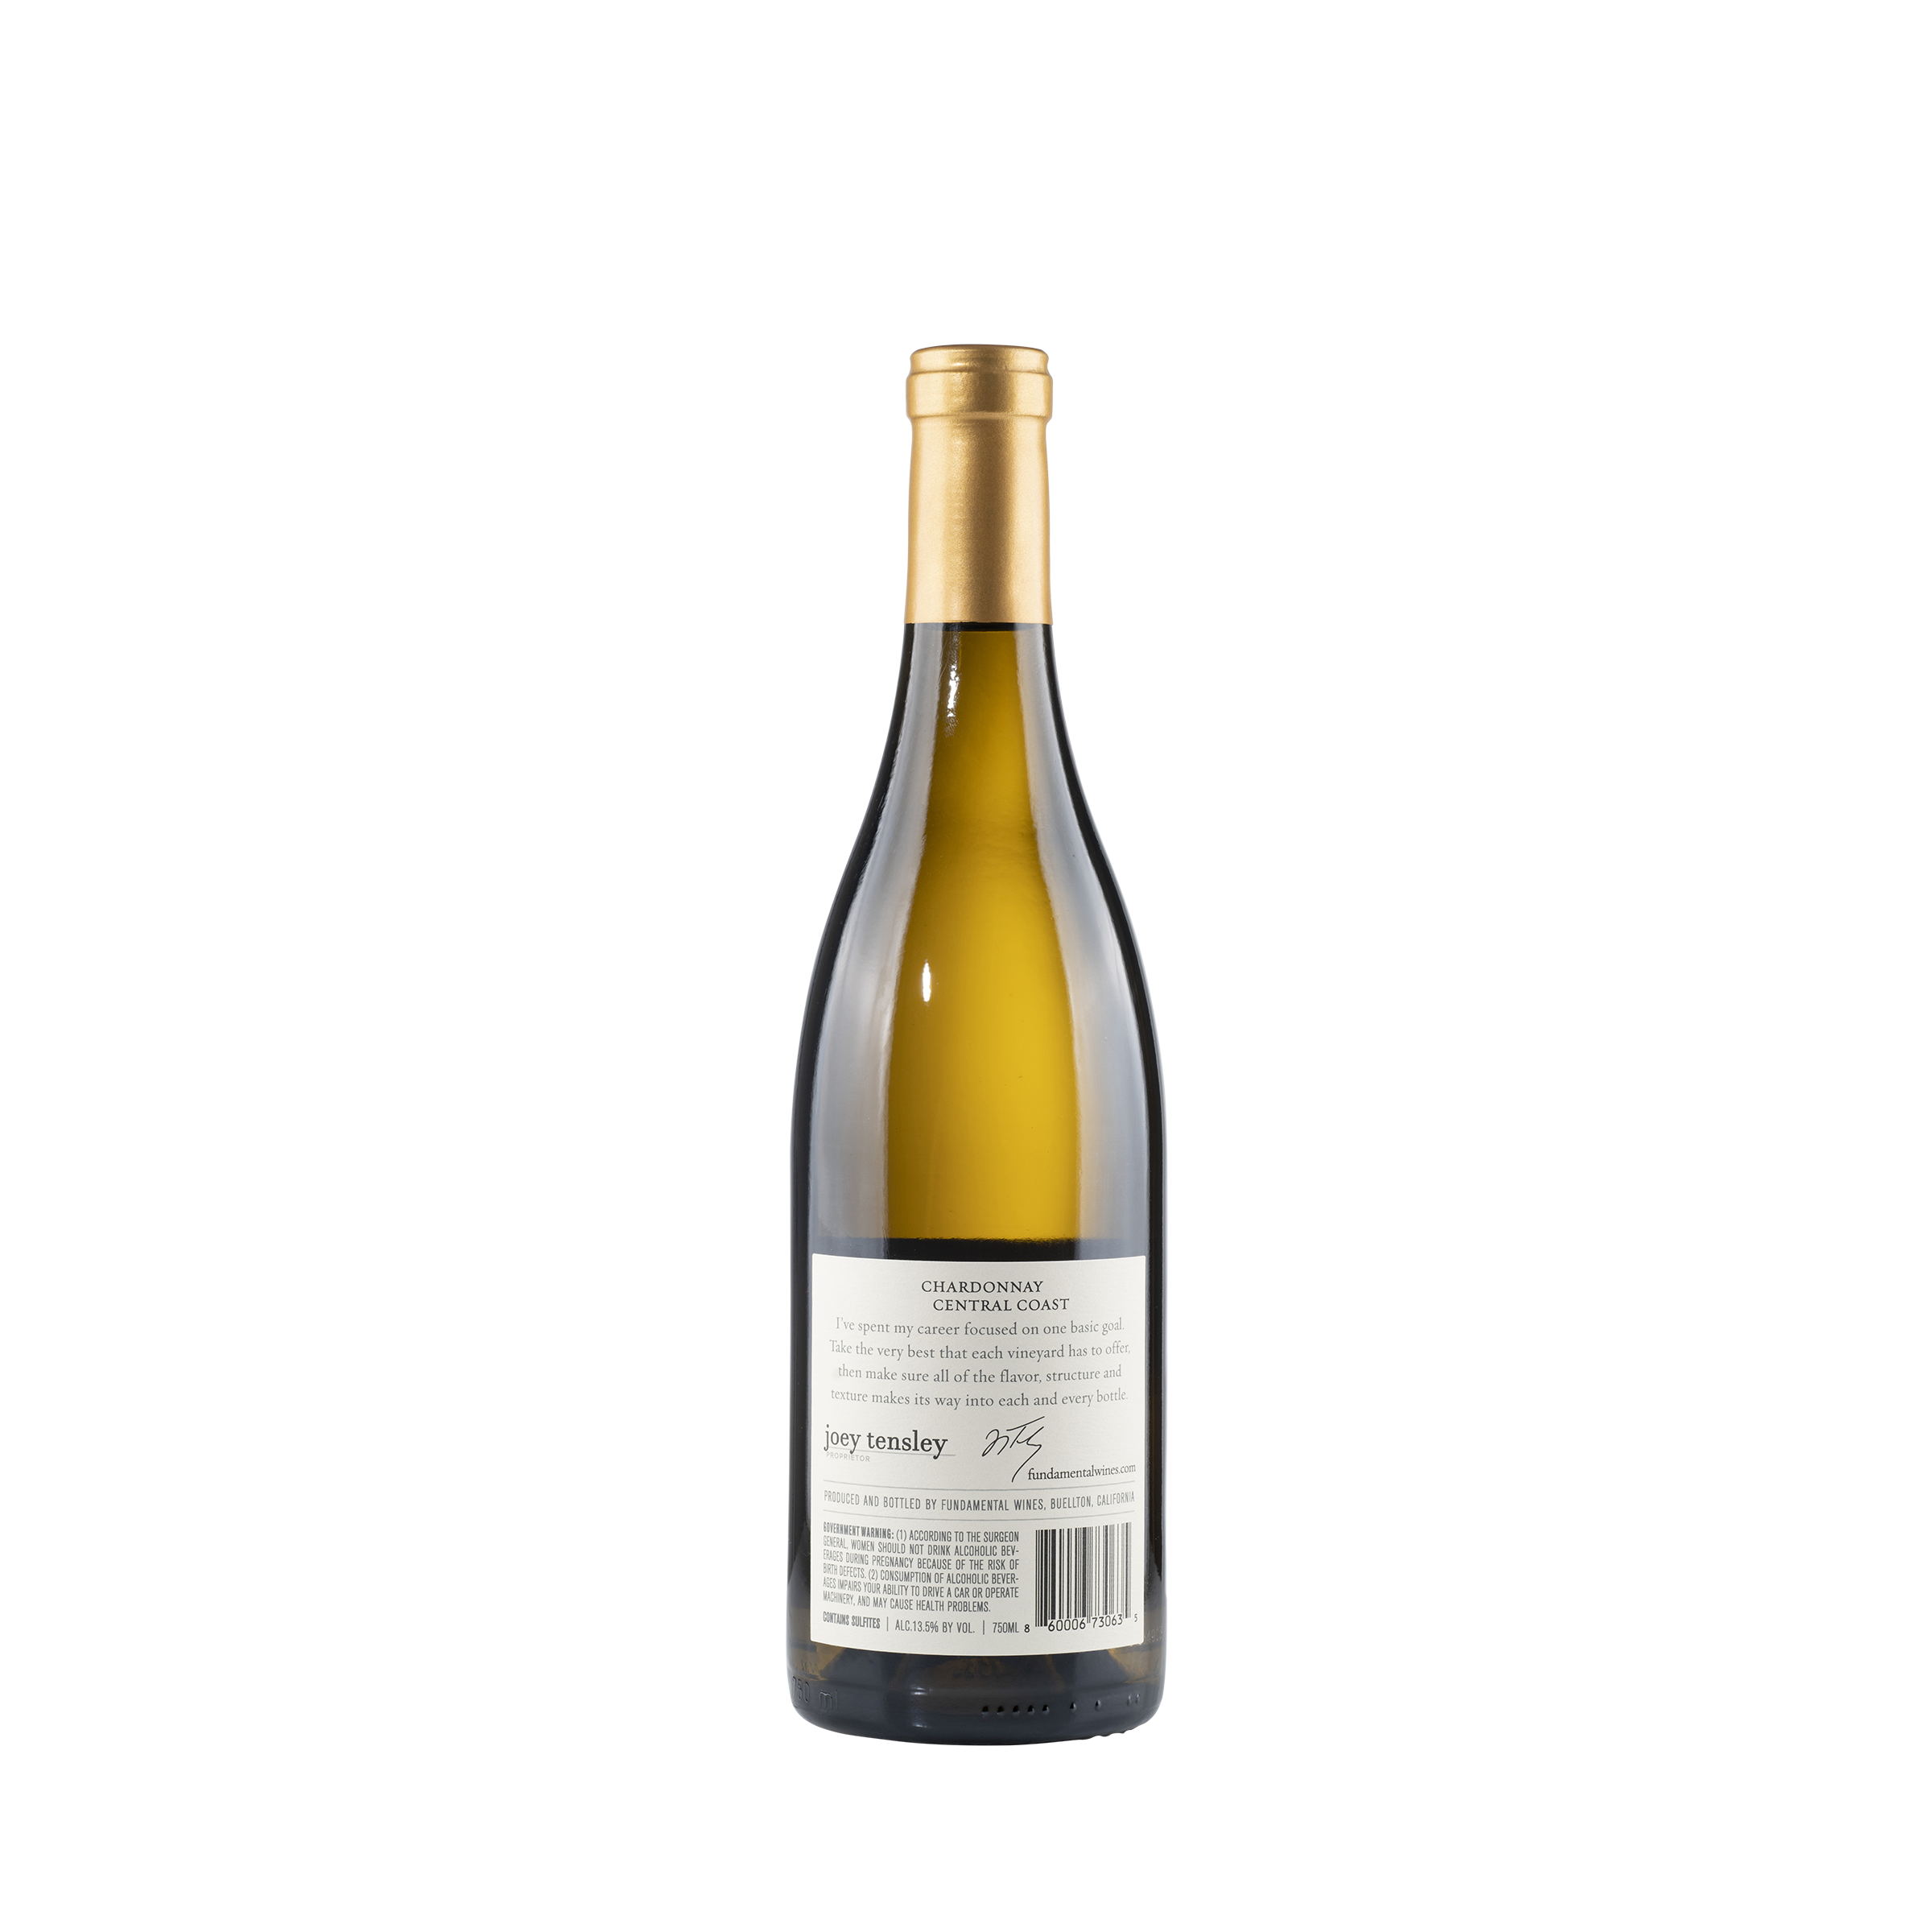 Chardonnay Central Coast 2021 Bottle Back